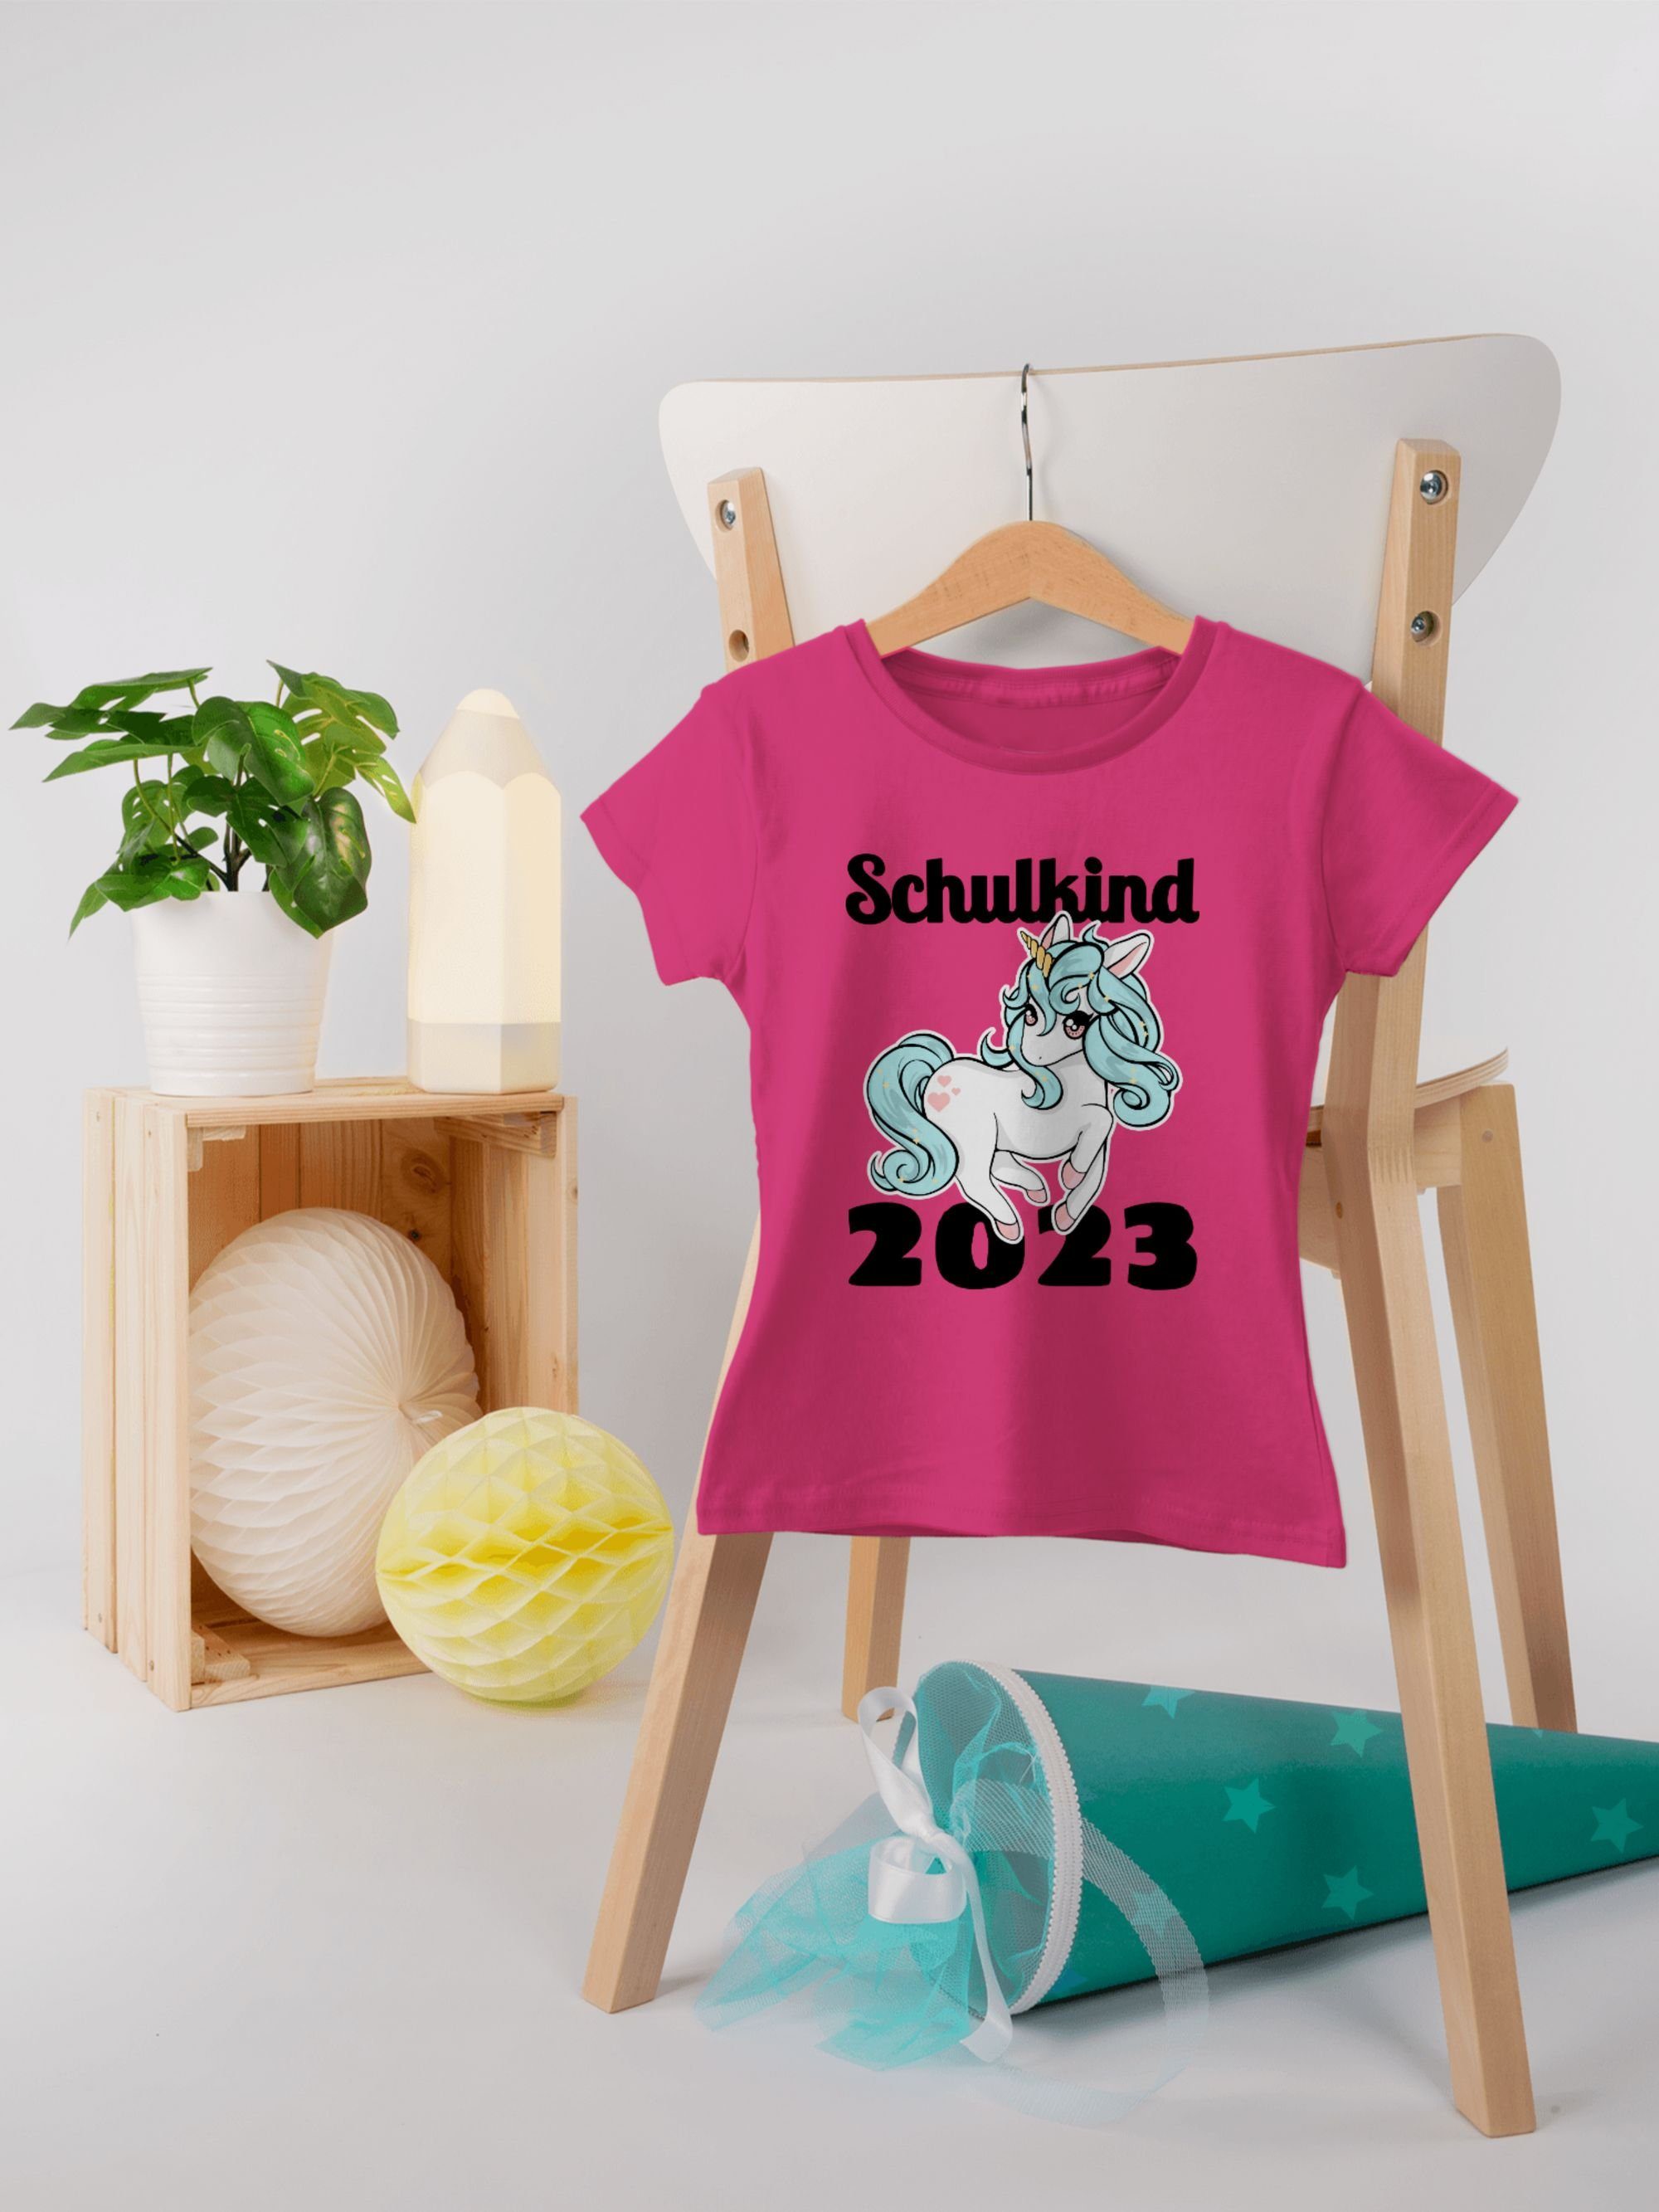 Einschulung Fuchsia Einhorn Mädchen T-Shirt 2023 Shirtracer 1 Schulkind